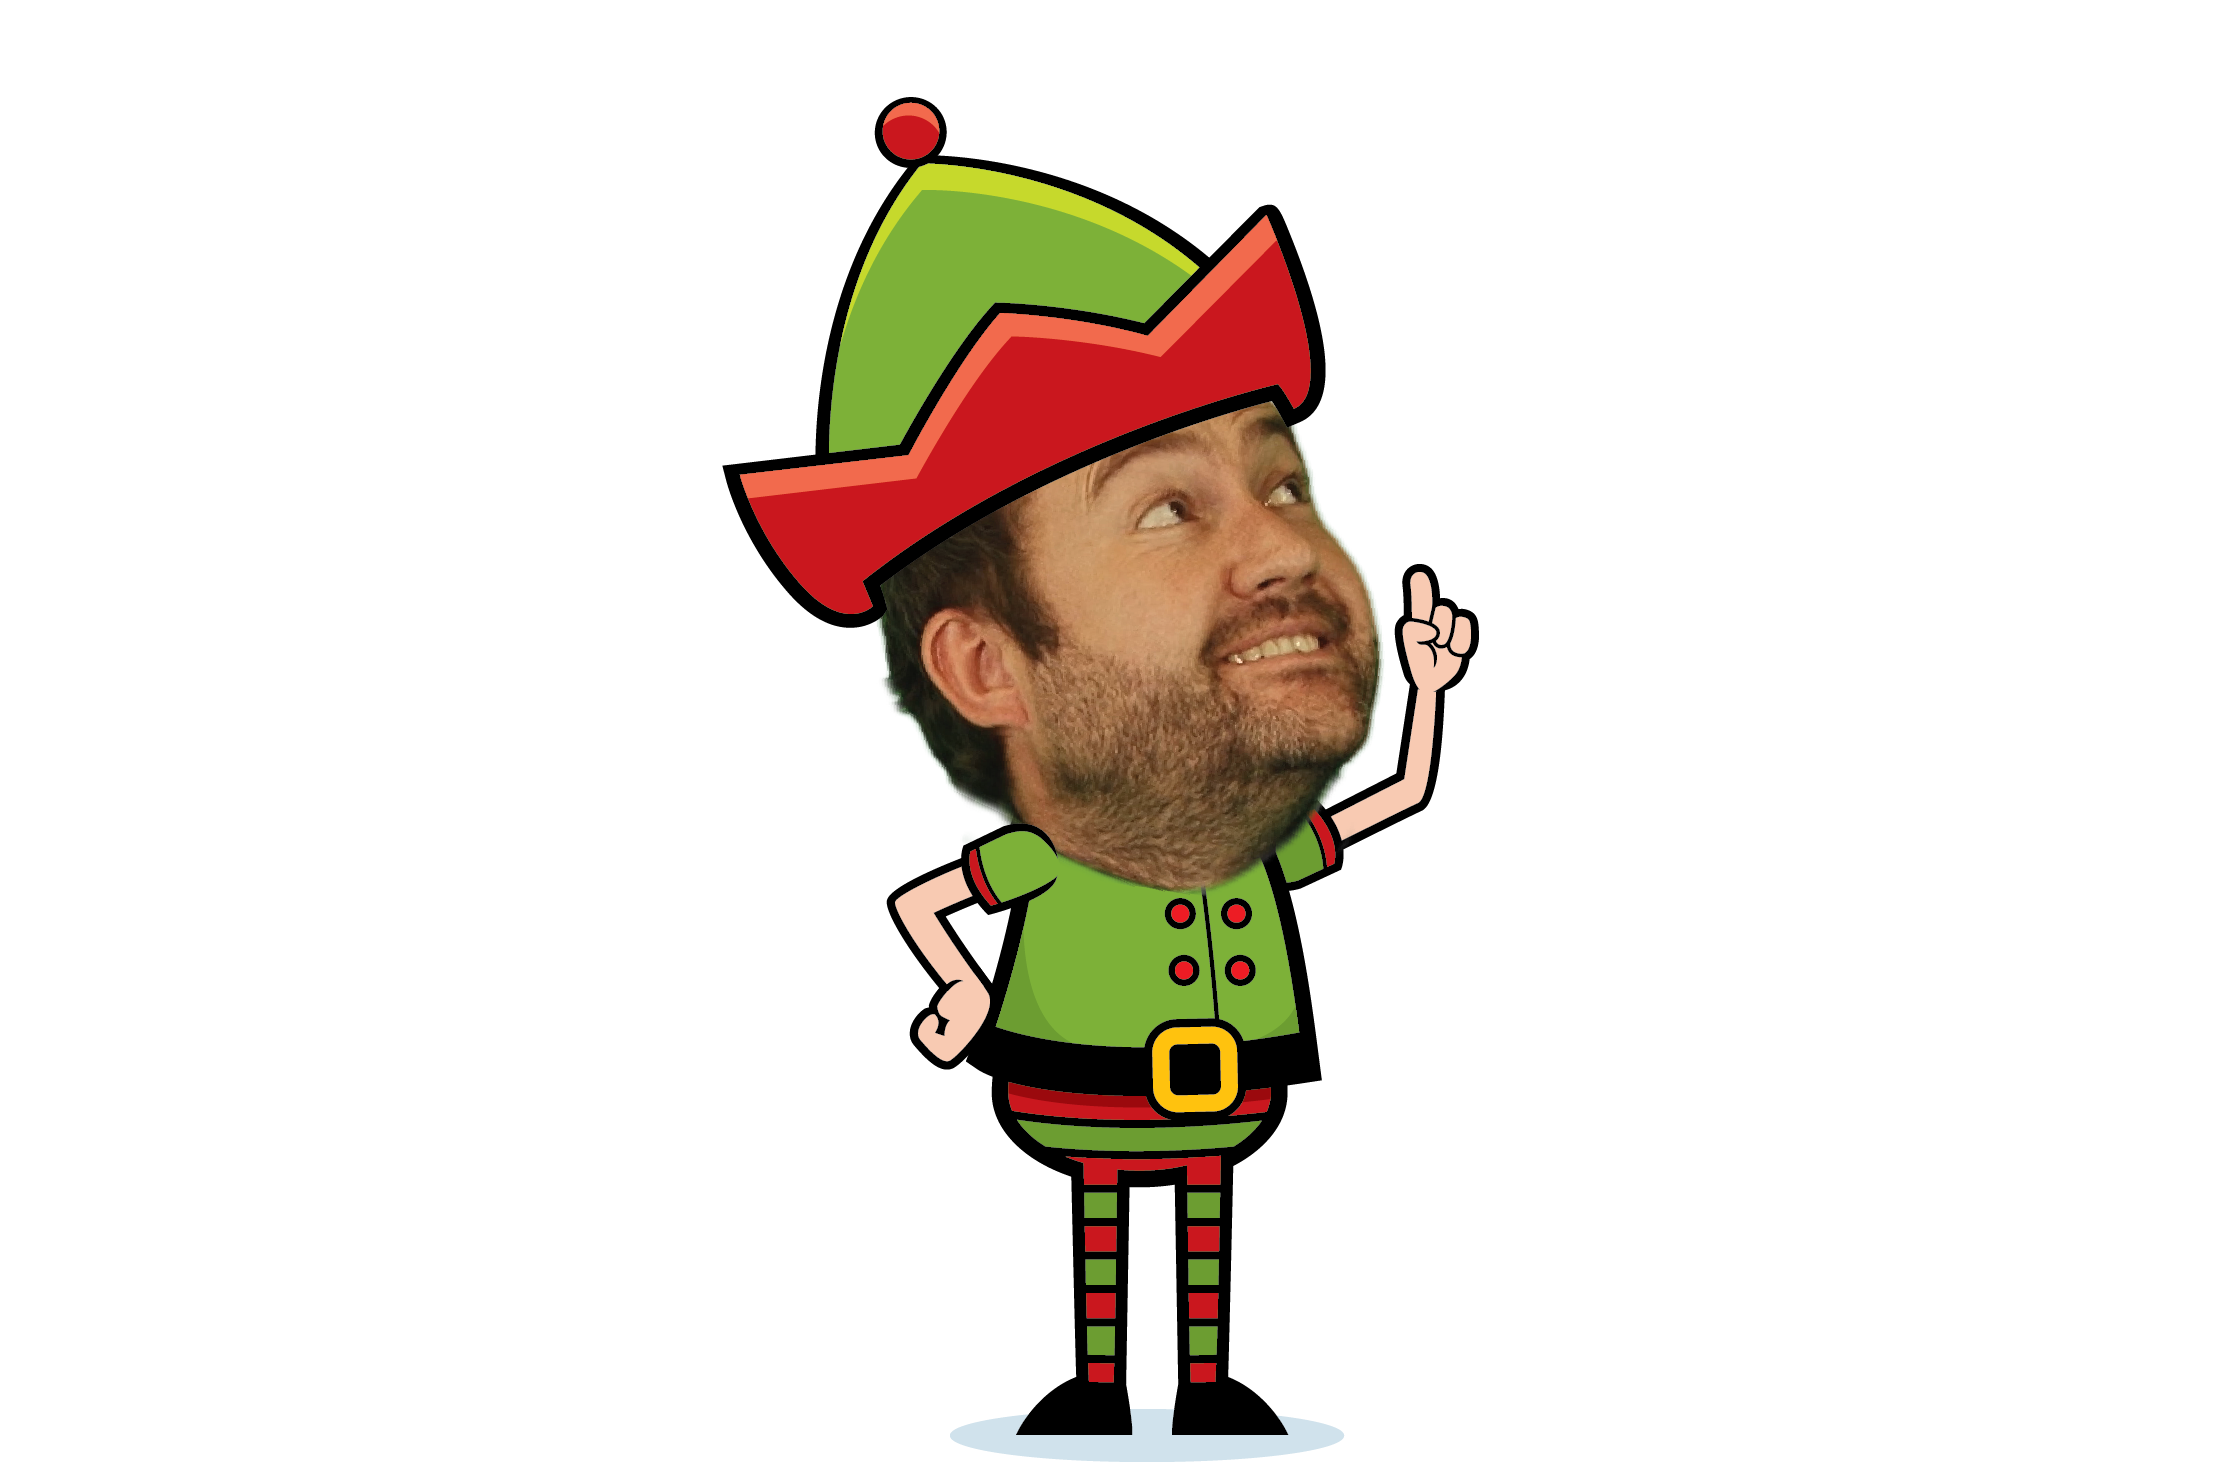 Matt the Elf